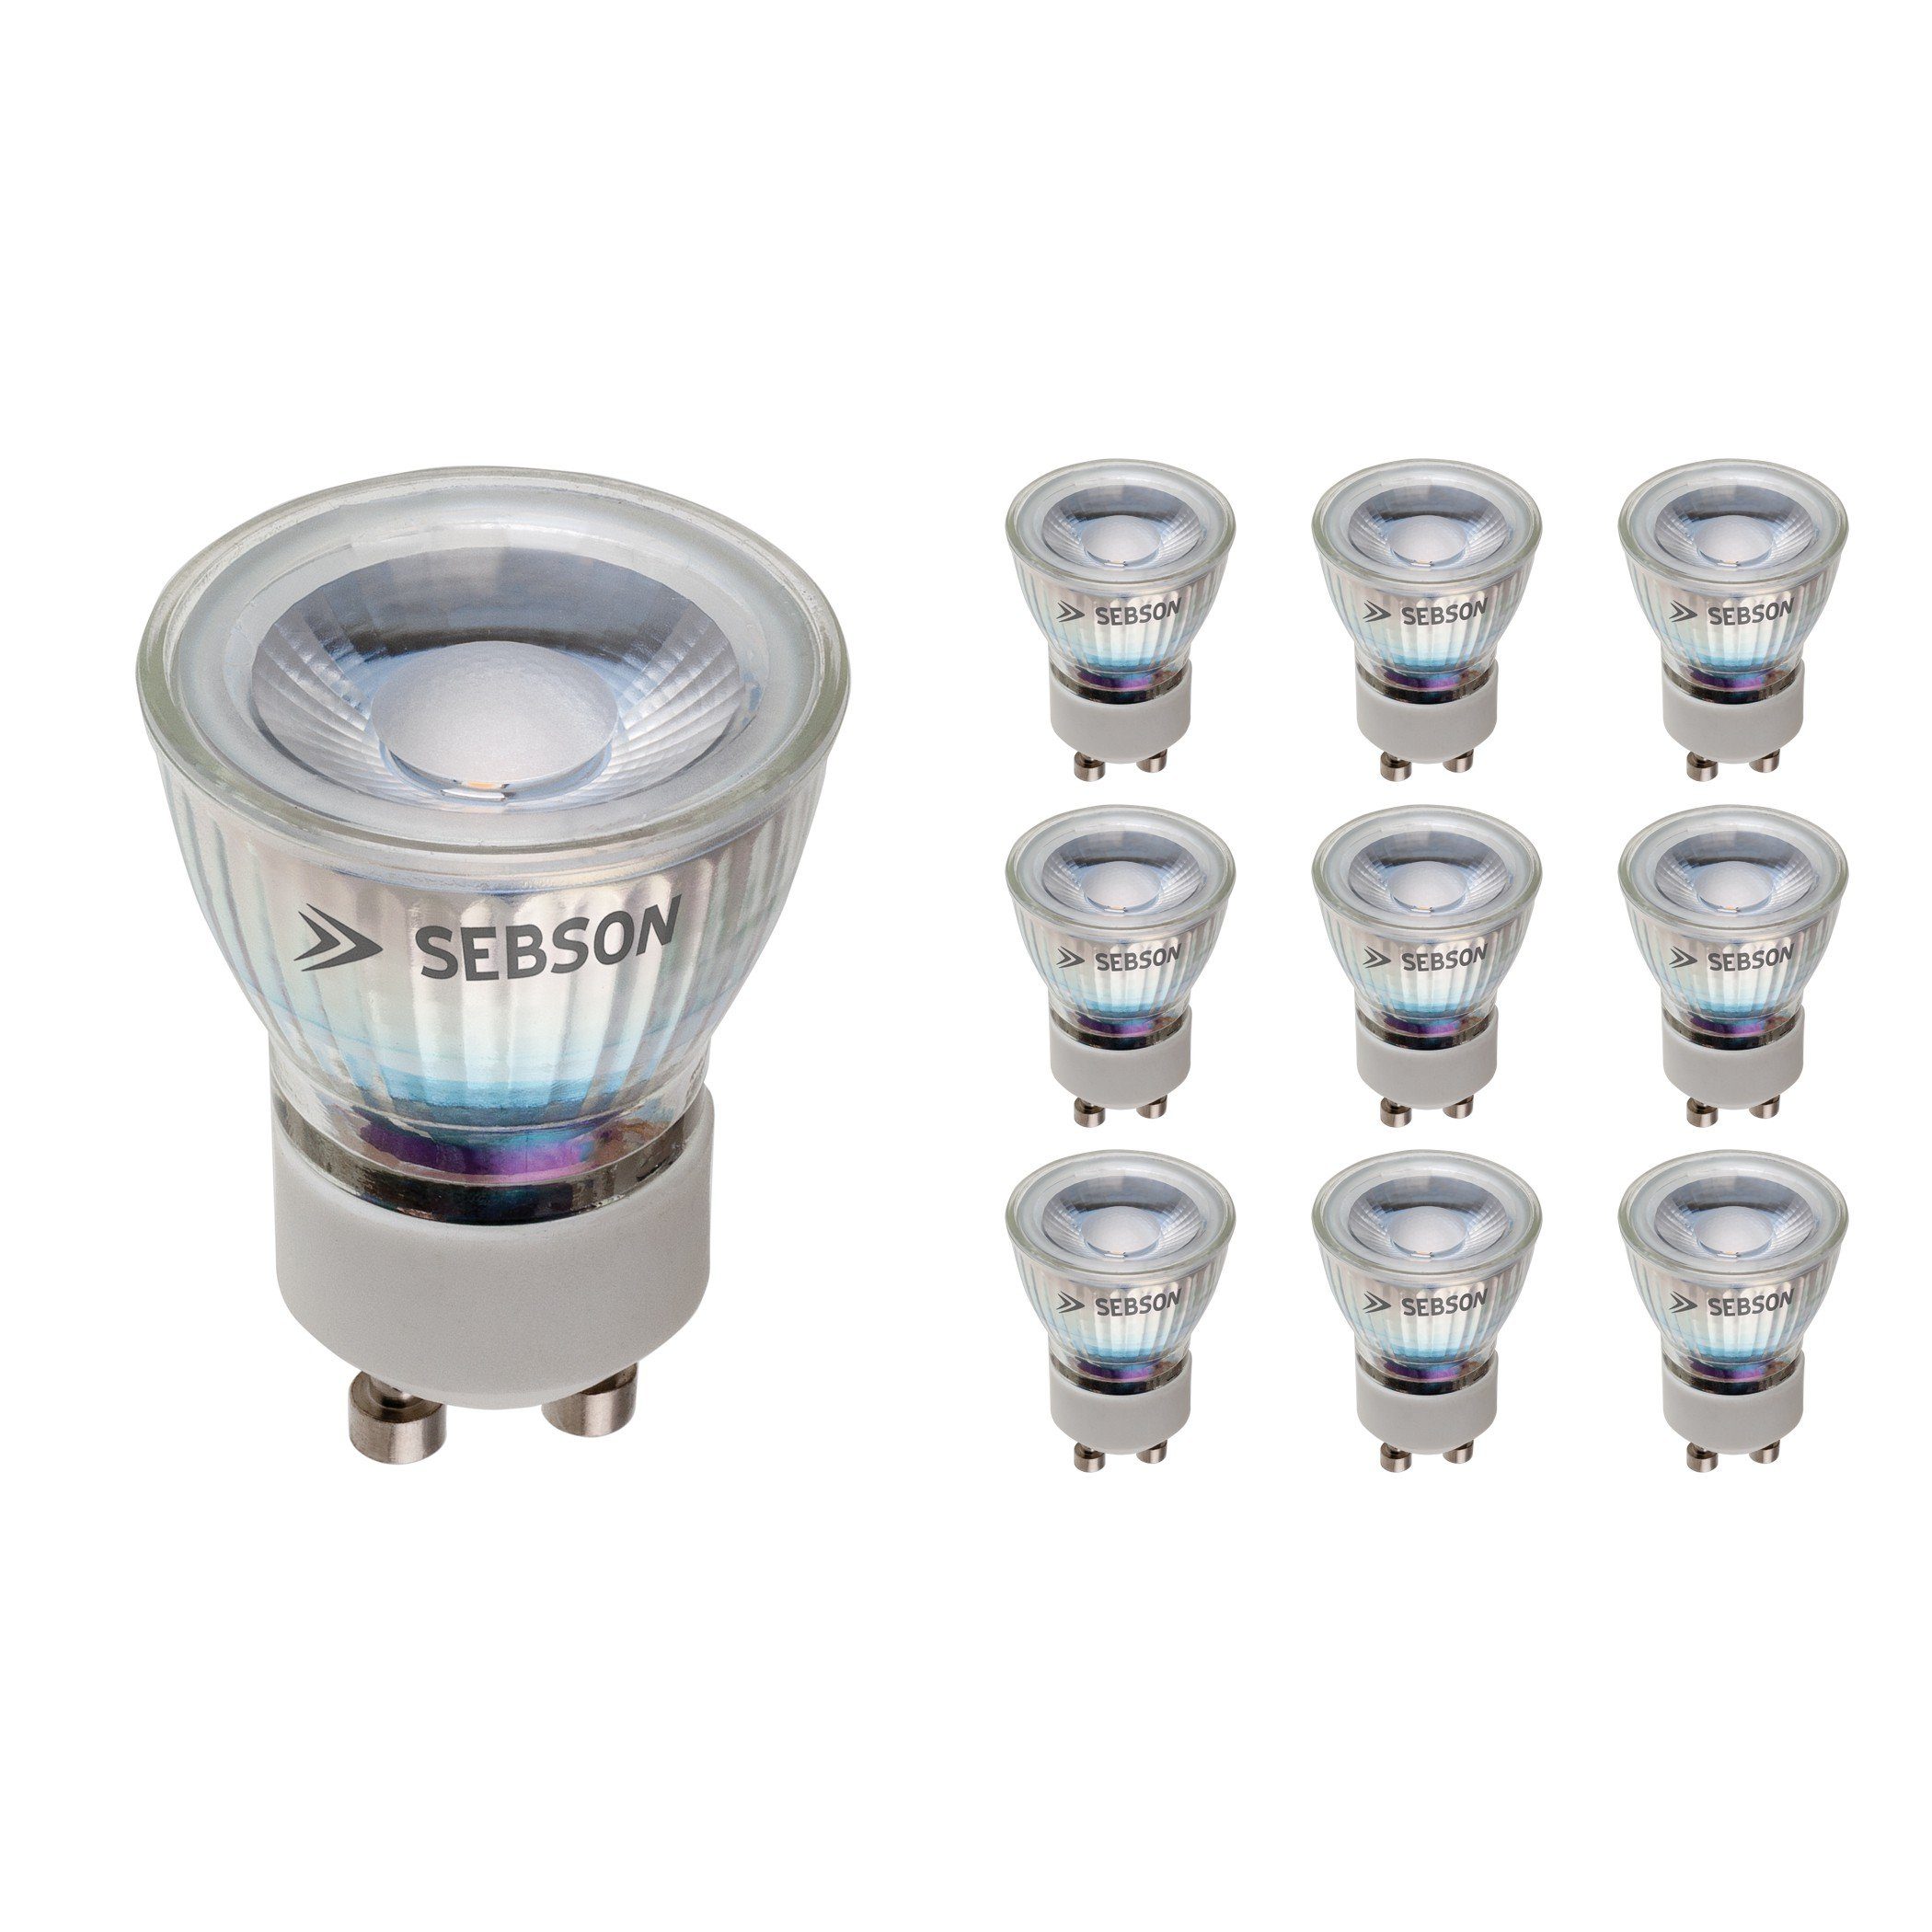 SEBSON LED-Leuchtmittel LED Lampe GU10 warmweiß 3W 35mm 250lm Spot 46° 230V - 10er Pack